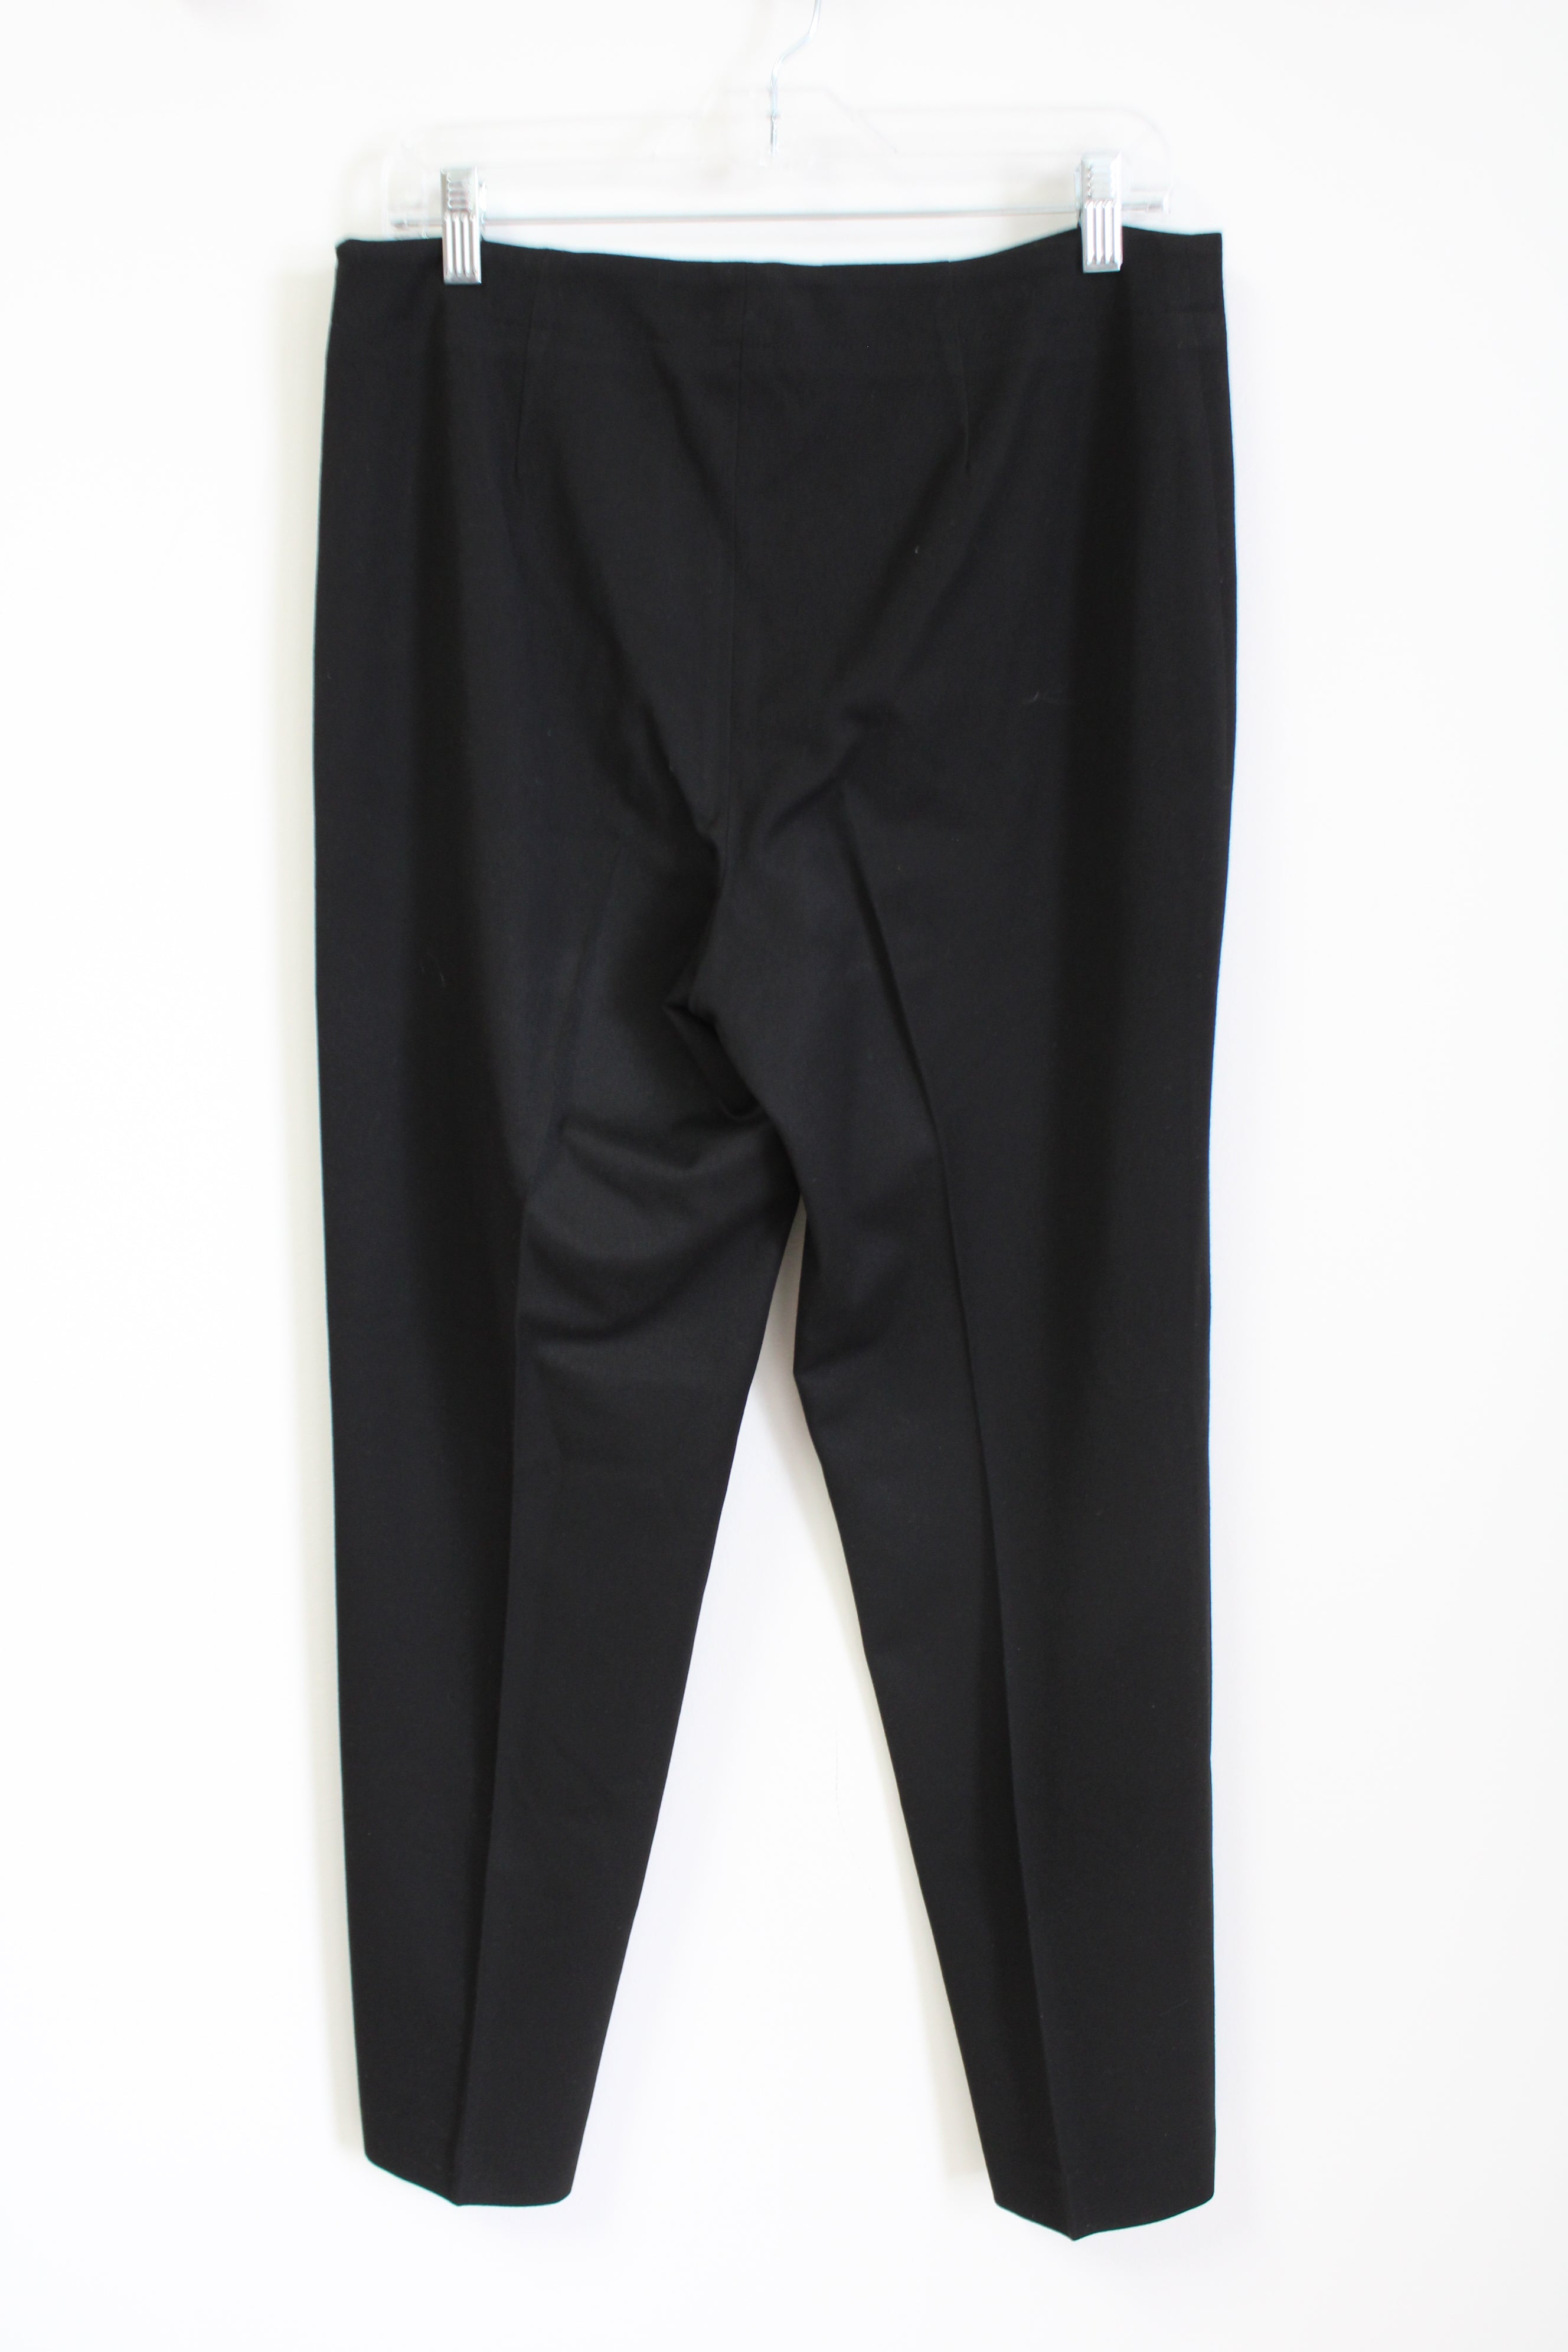 Talbots Classic Side Zip Slim Black Pant | 8